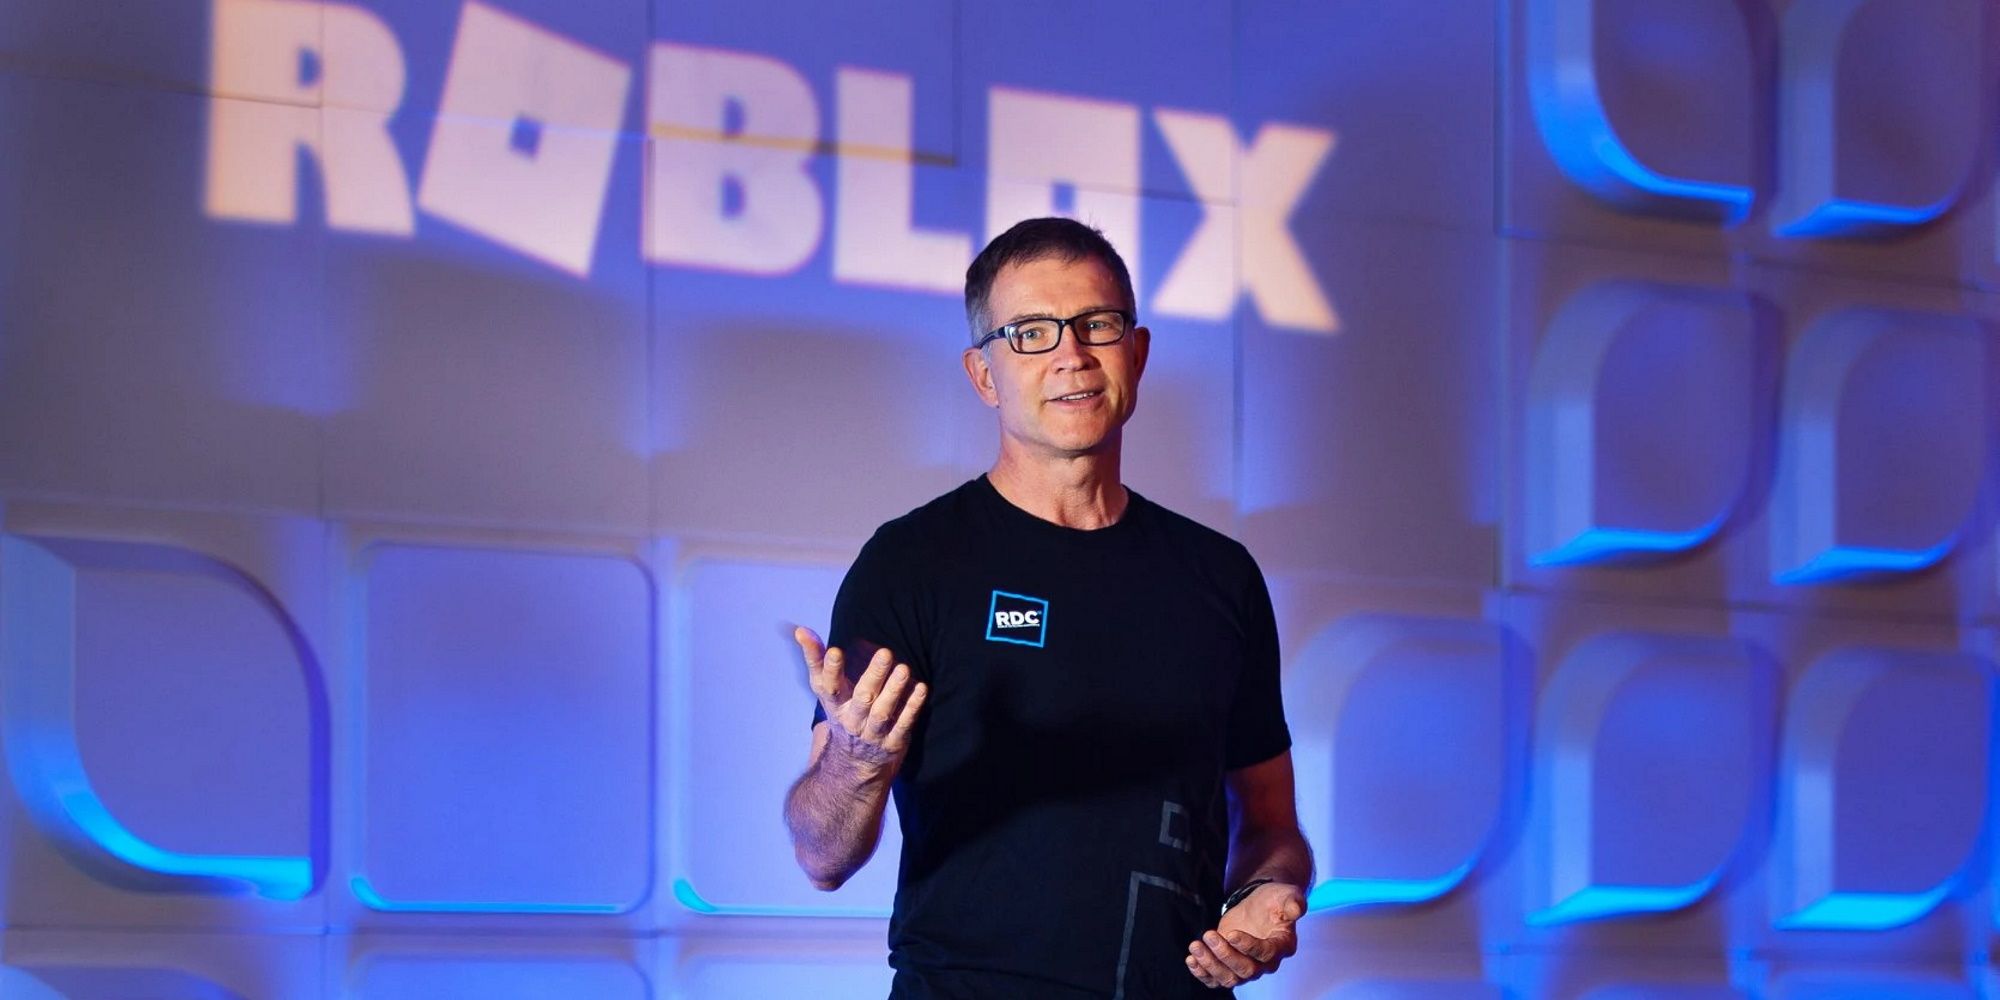 Roblox CEO is worth $4.6 billion, and Index stake worth $3.7 billion